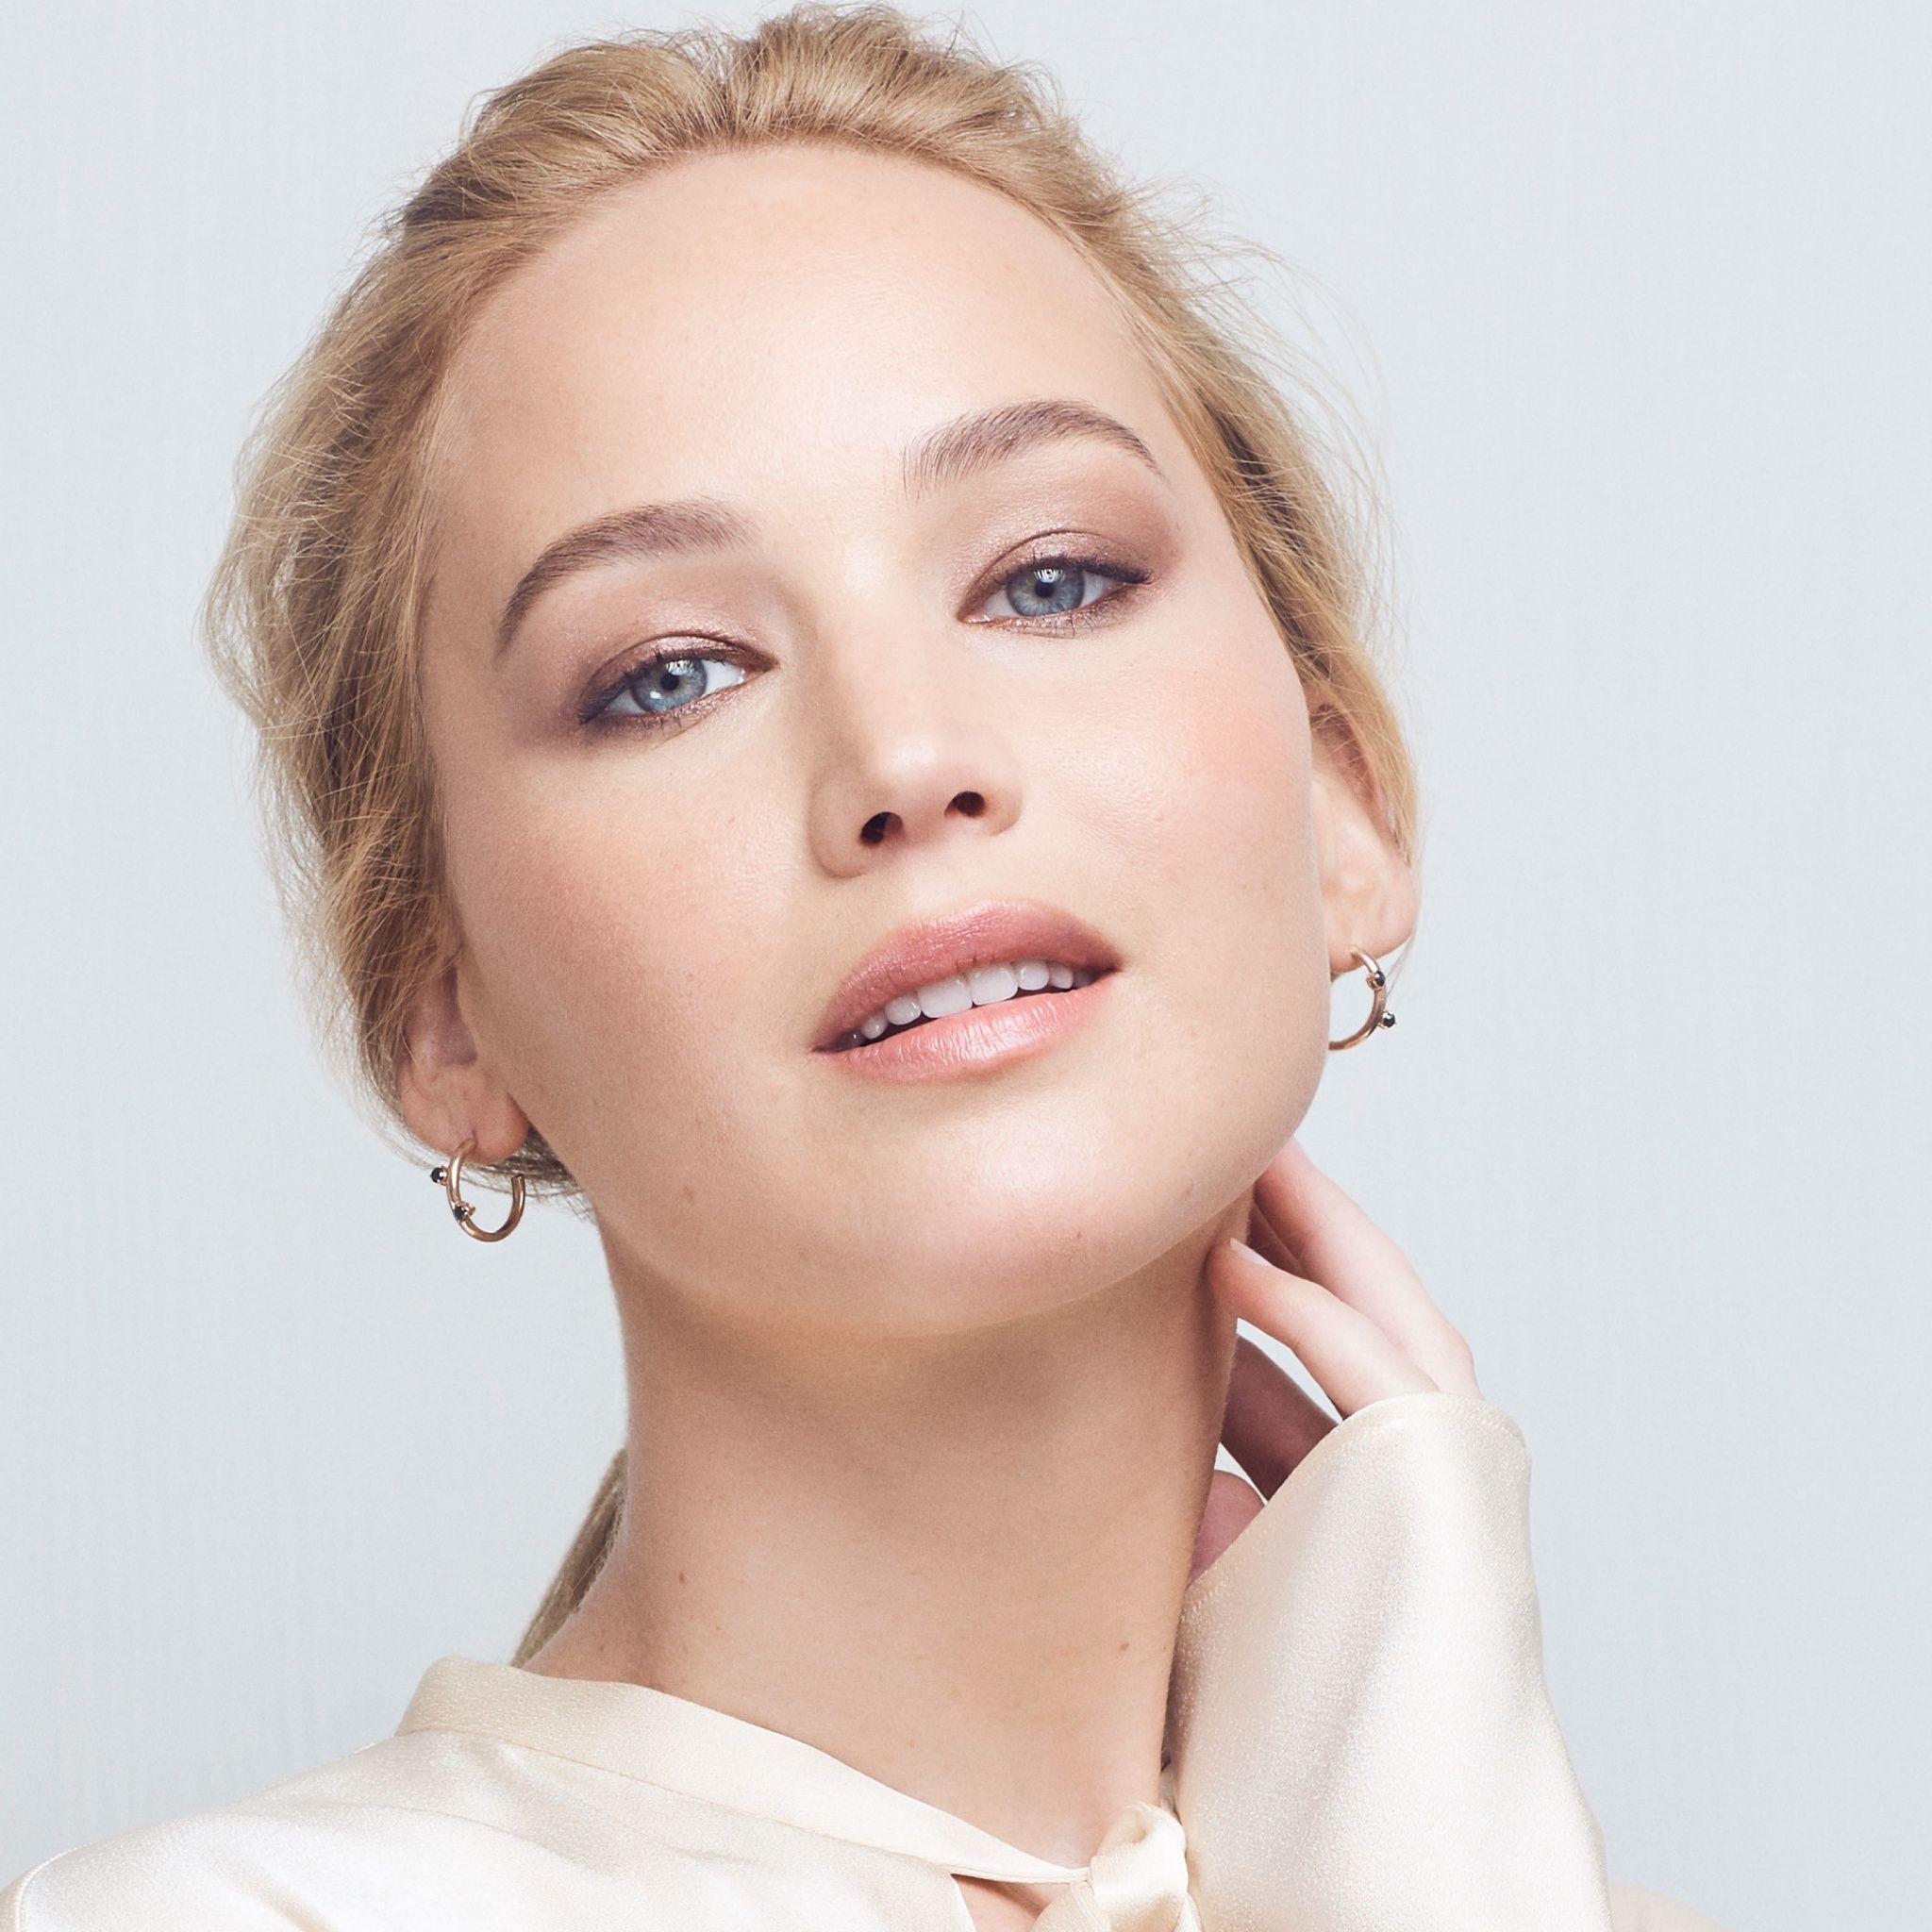 Jennifer Lawrence wearing a white top and gold hoop earrings - Jennifer Lawrence